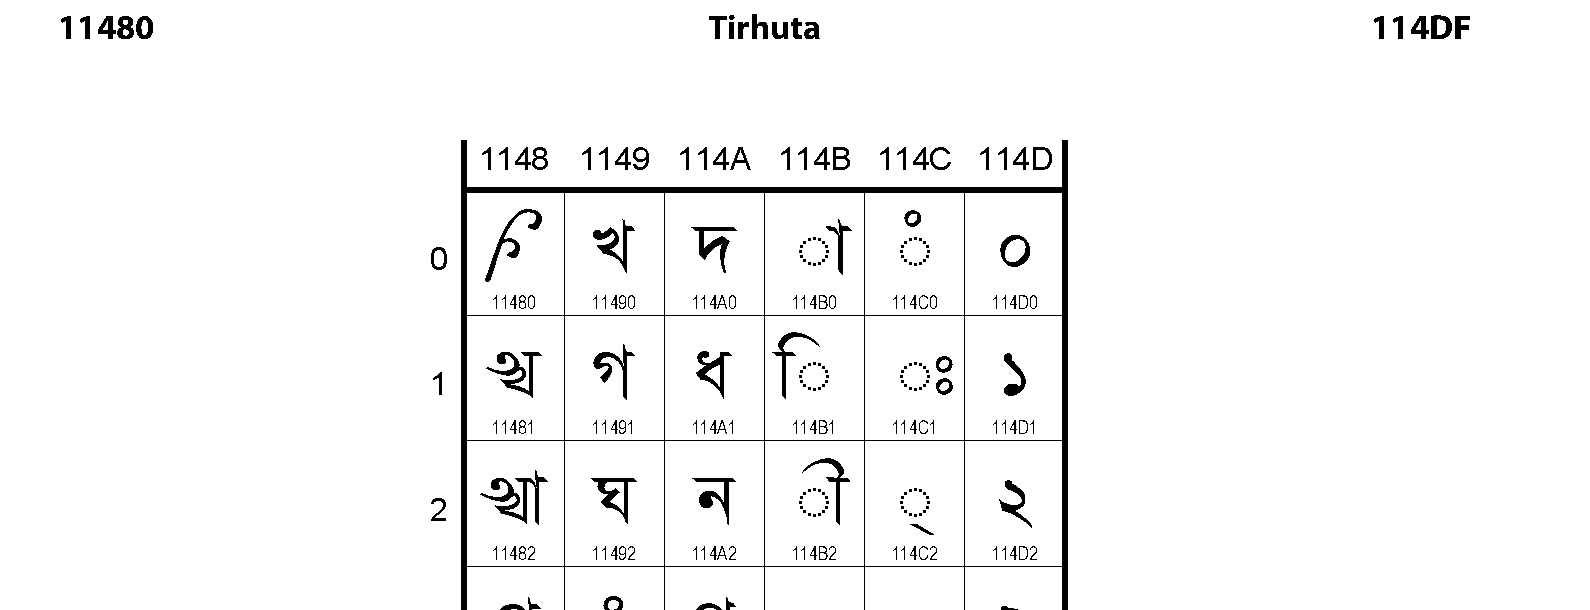 Unicode - Tirhuta